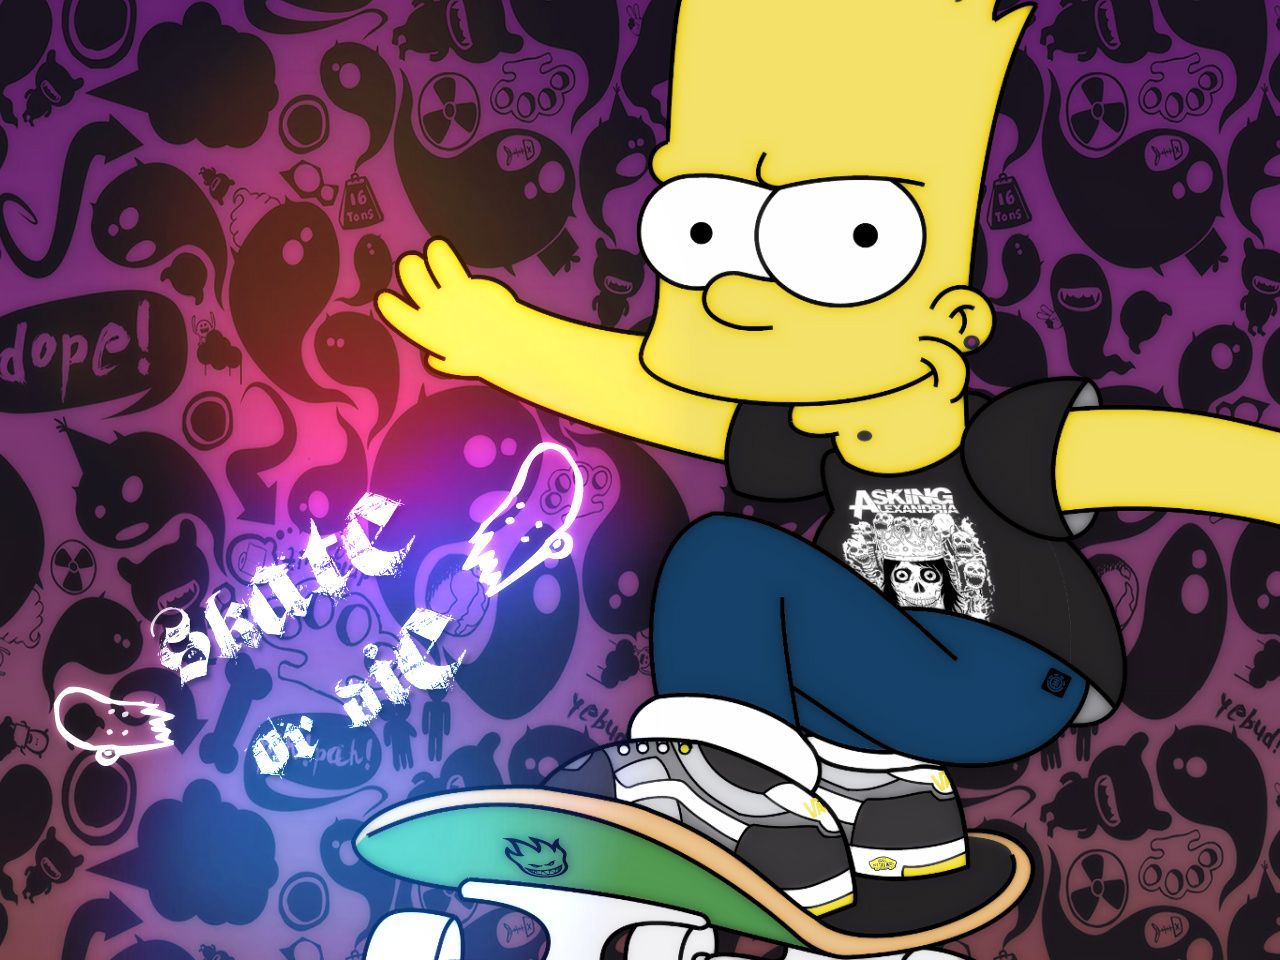 Картинки на заставку телефона для пацана. Барт симпсон крутой. Барт симпсон на скейтборде. Барт симпсон 15 лет. Барт симпсон топ.